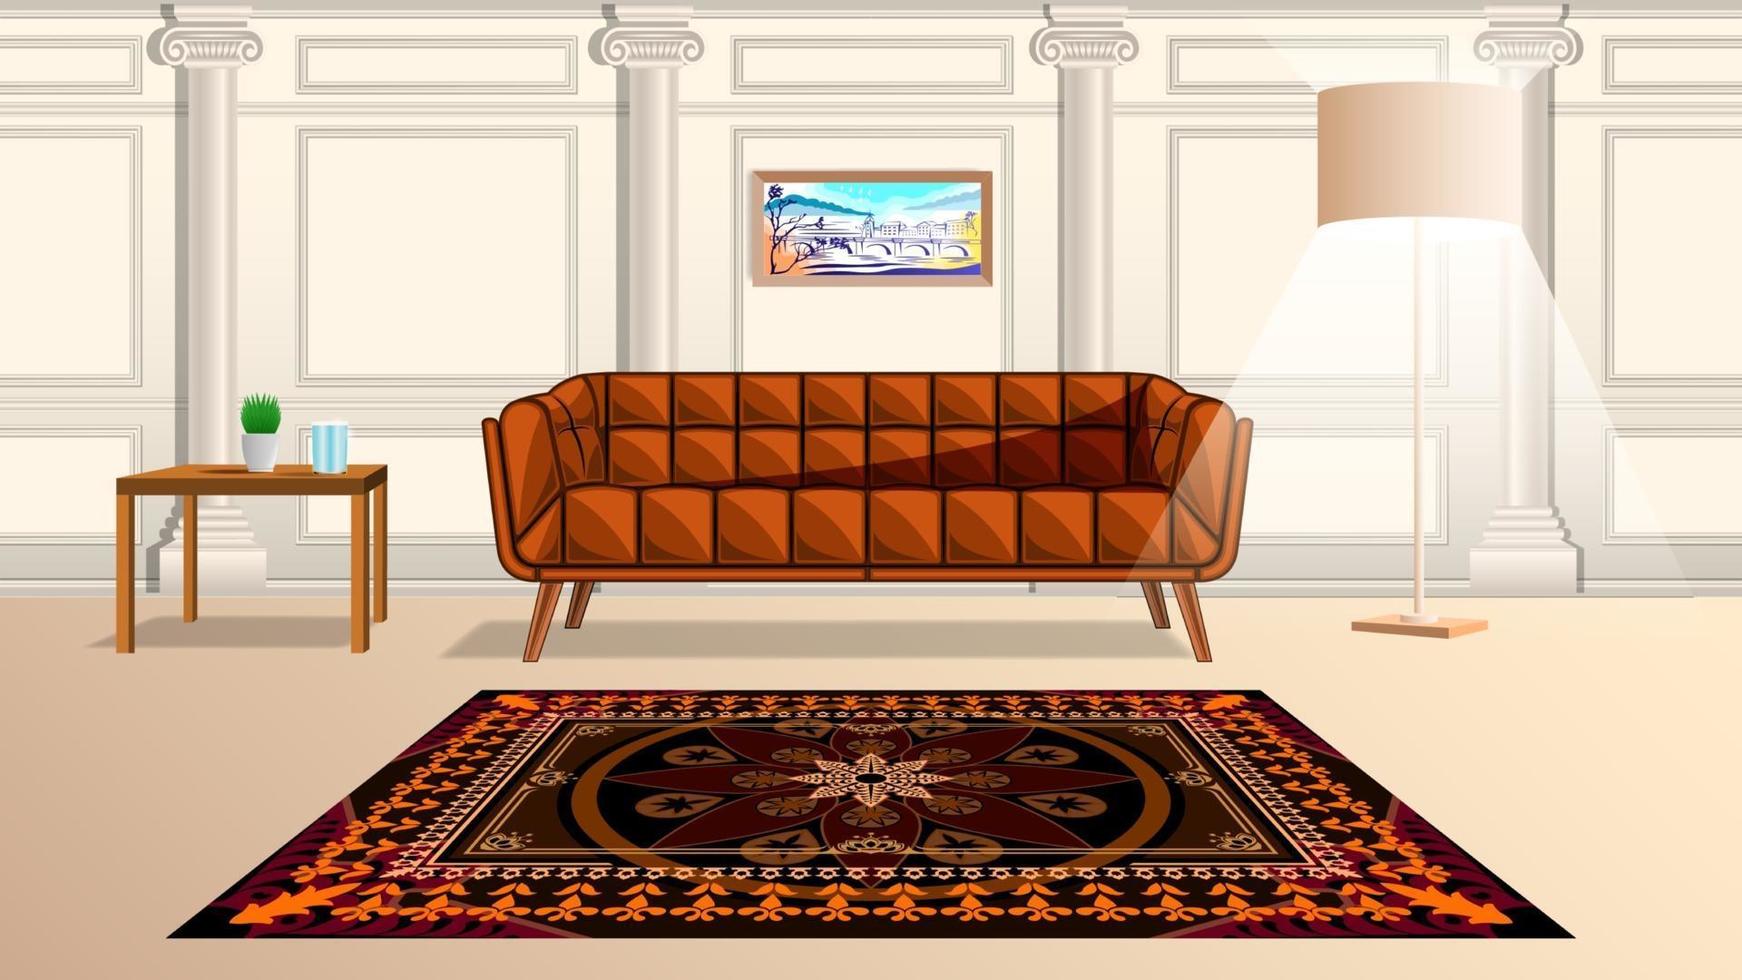 living room cartoon style vector